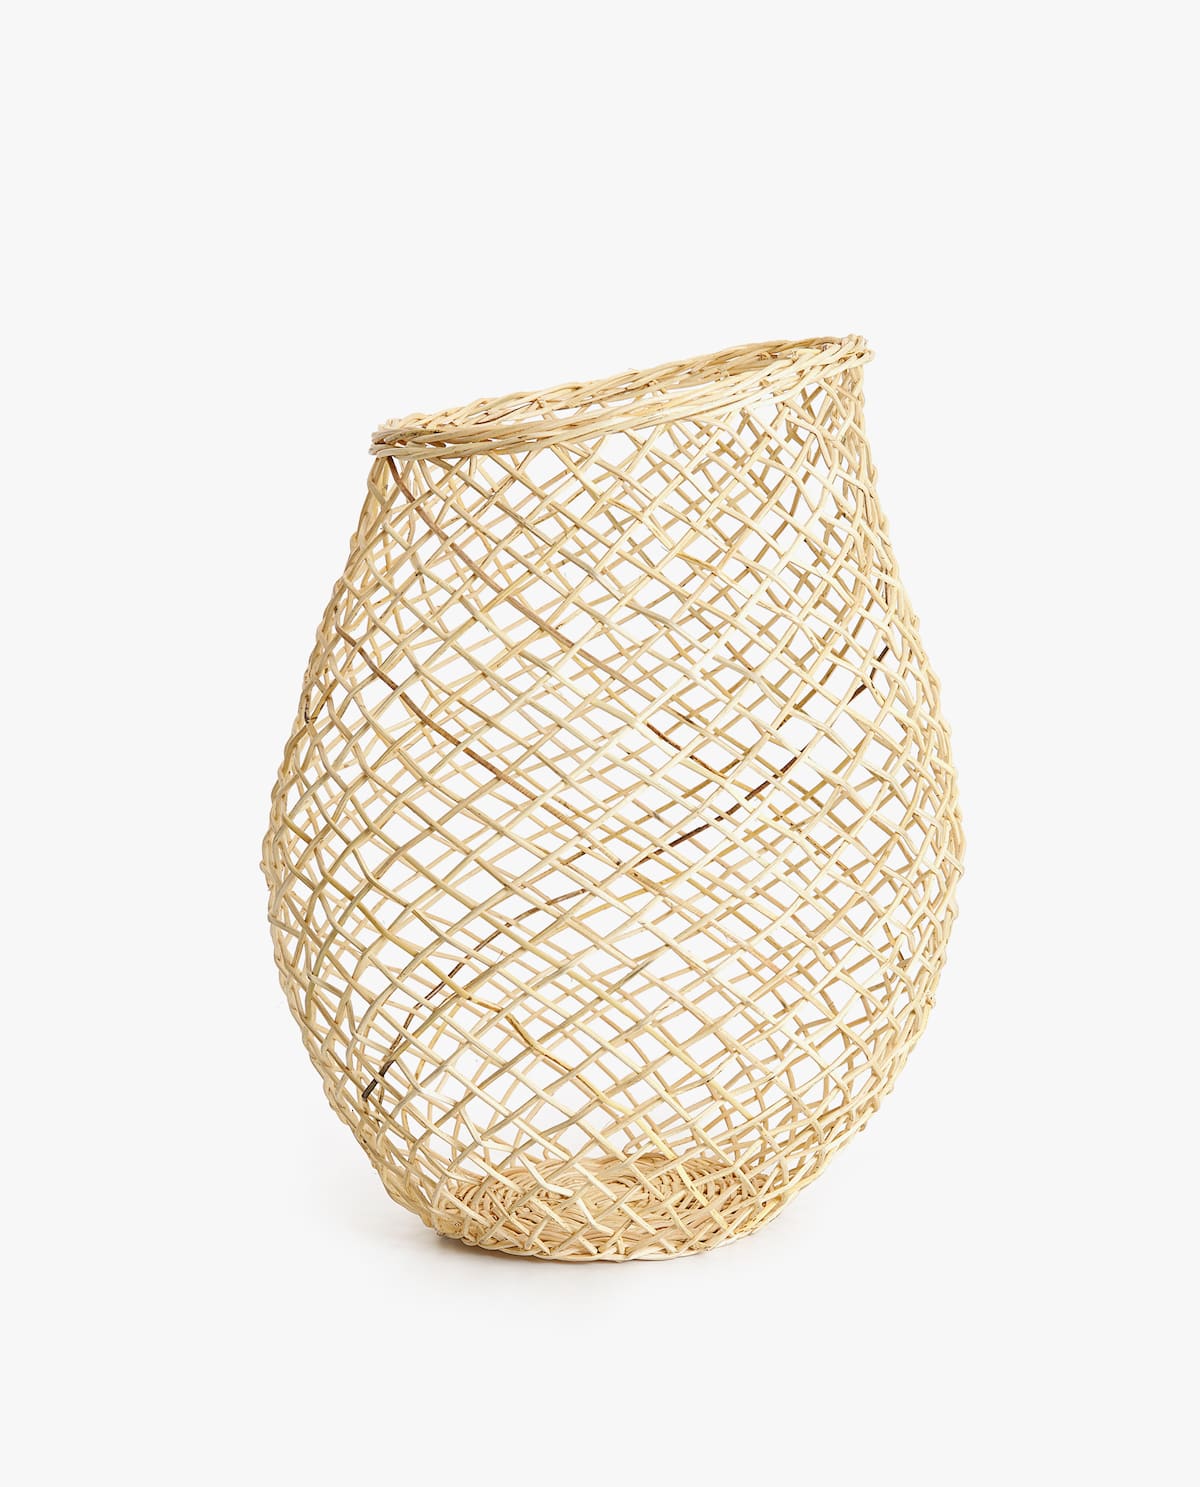 Round woven basket from Zara Home